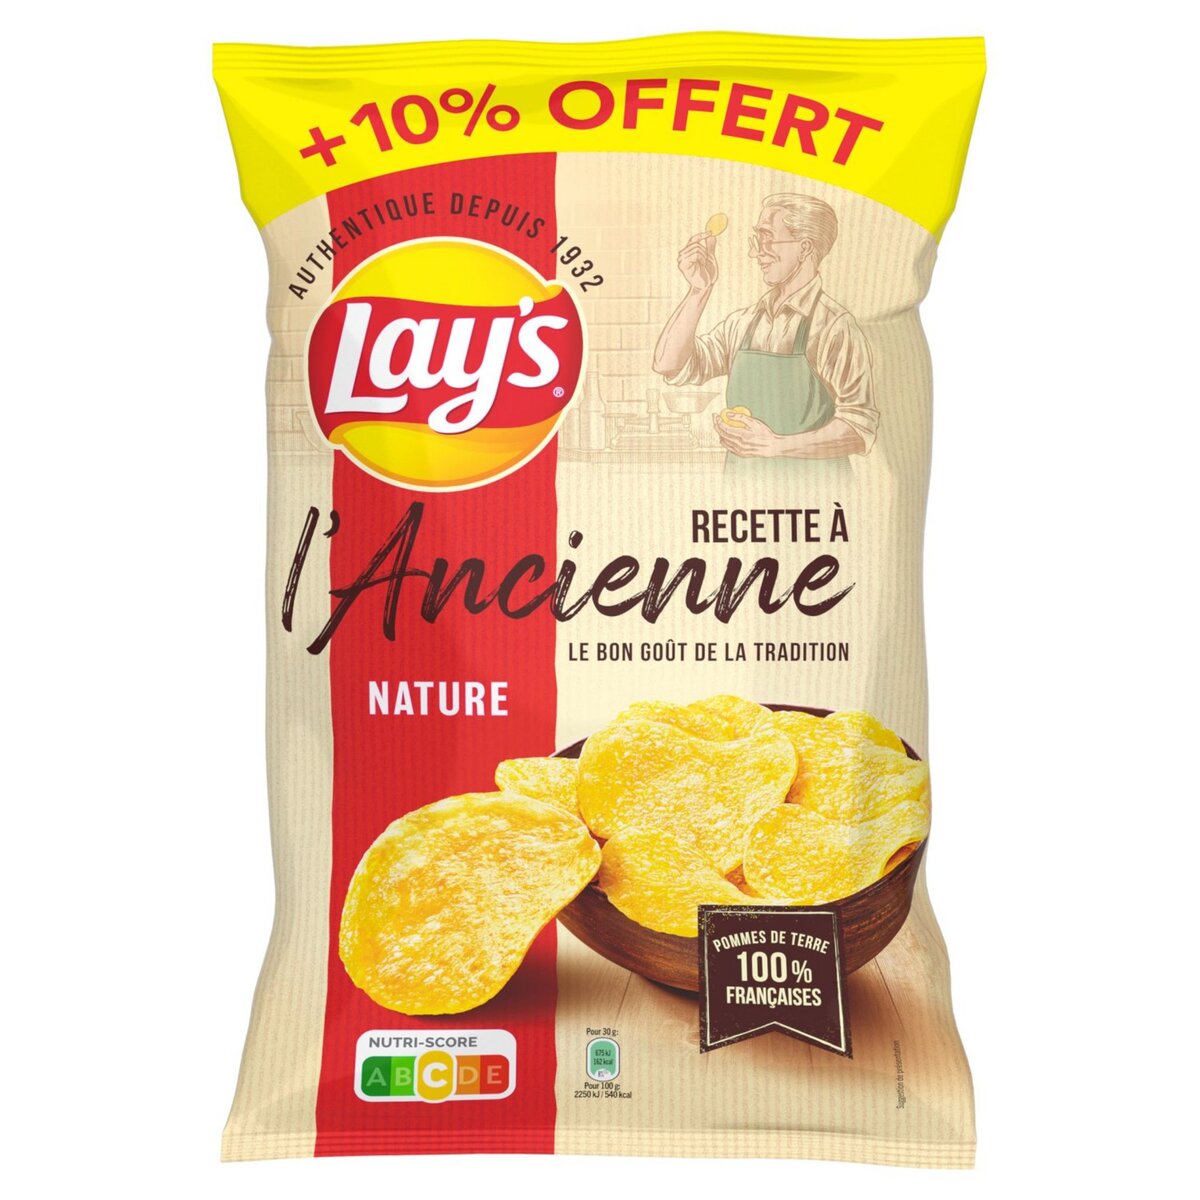 LAY'S Chips recette à l'ancienne nature 300g + 10% offert 400g